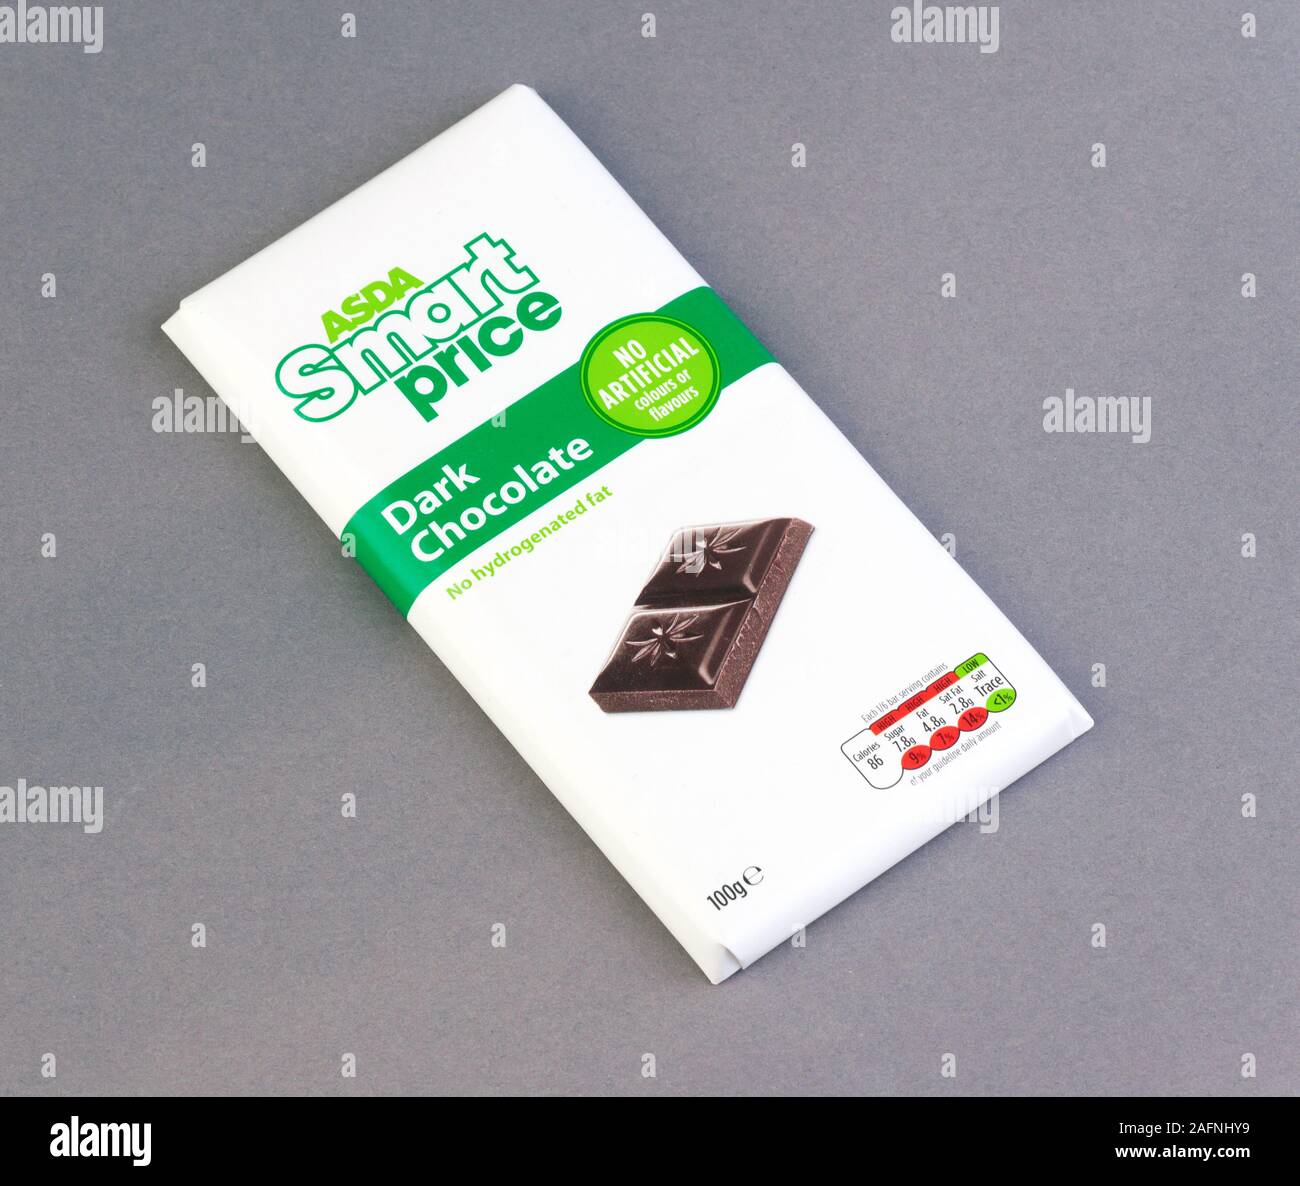 Asda Smart Price dark chocolate Stock Photo